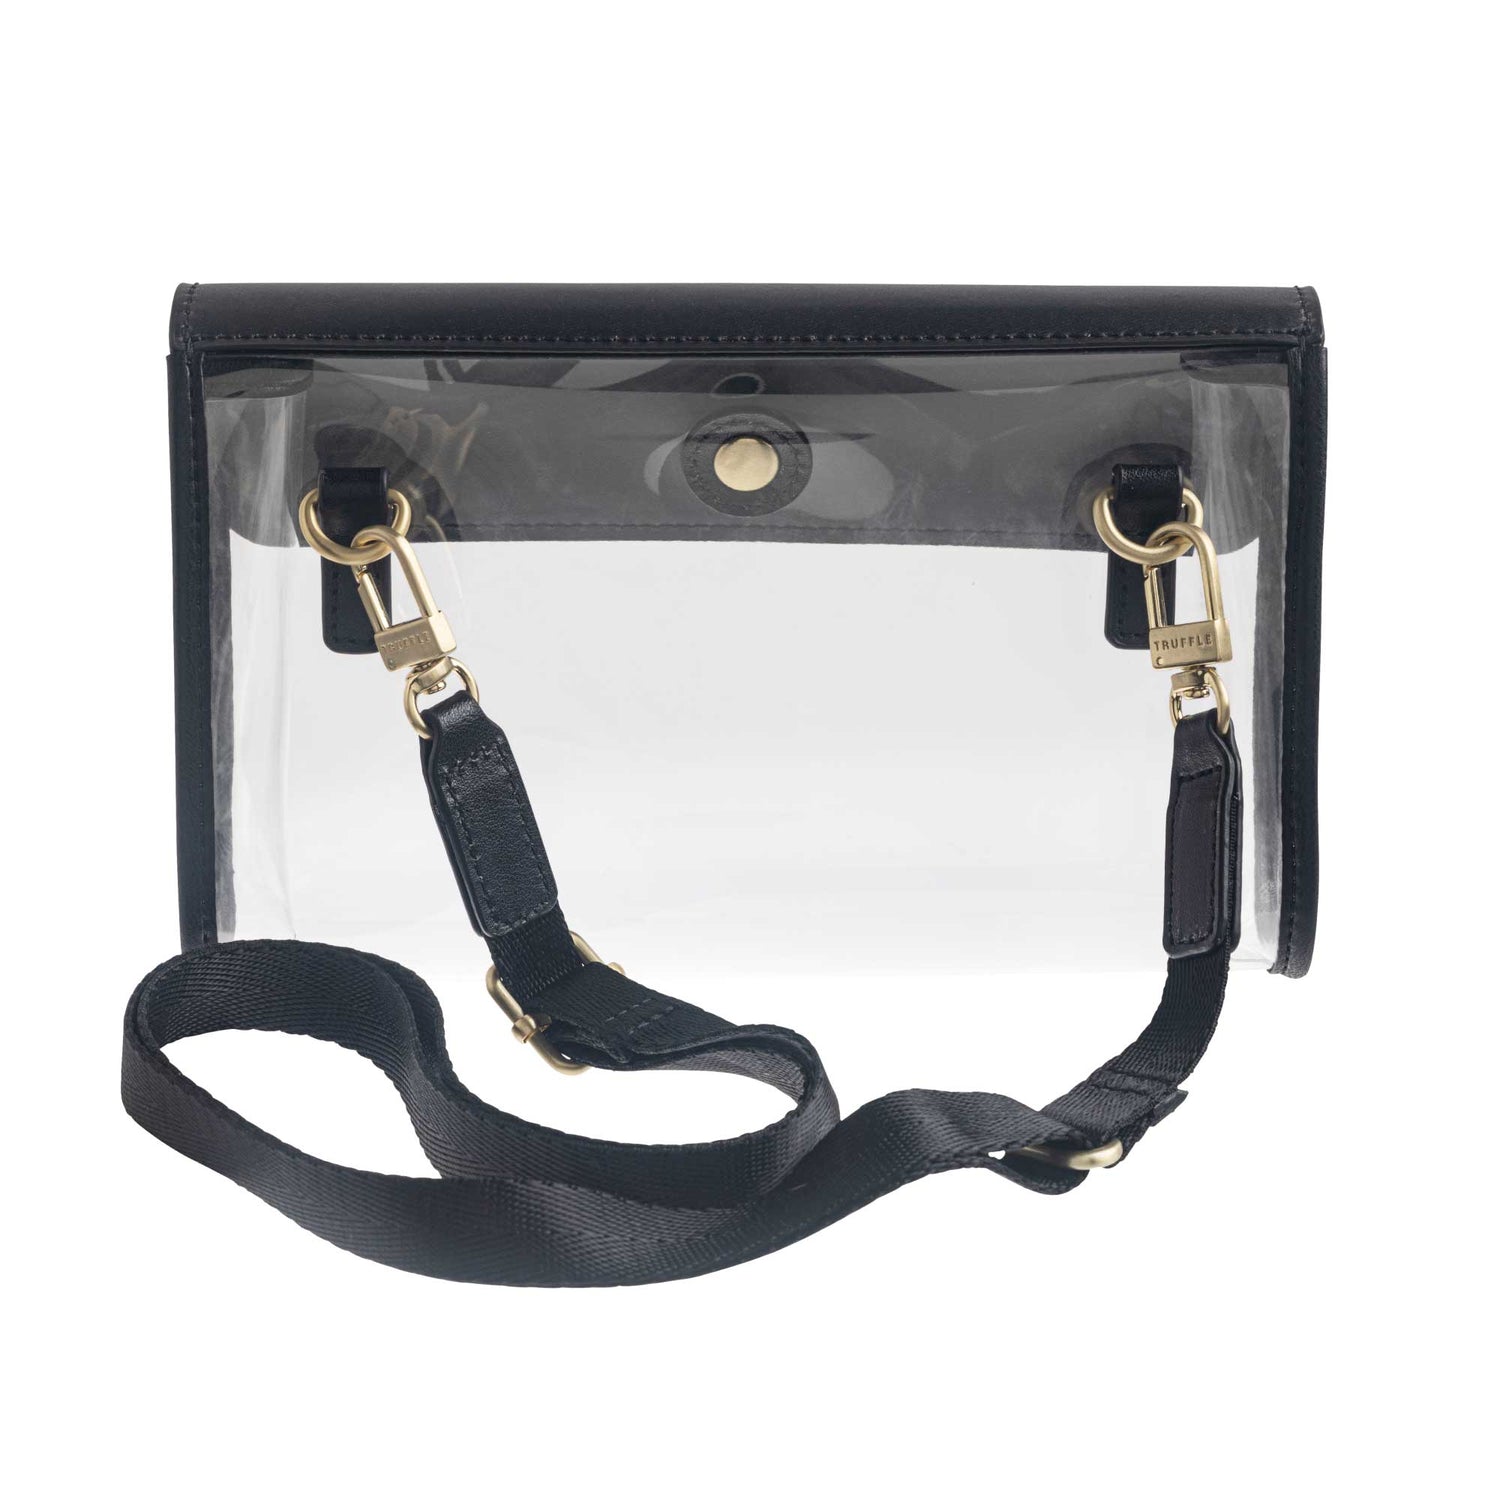 Clarity Convertible Belt Bag - Clear Belt Bag That Converts to Crossbody